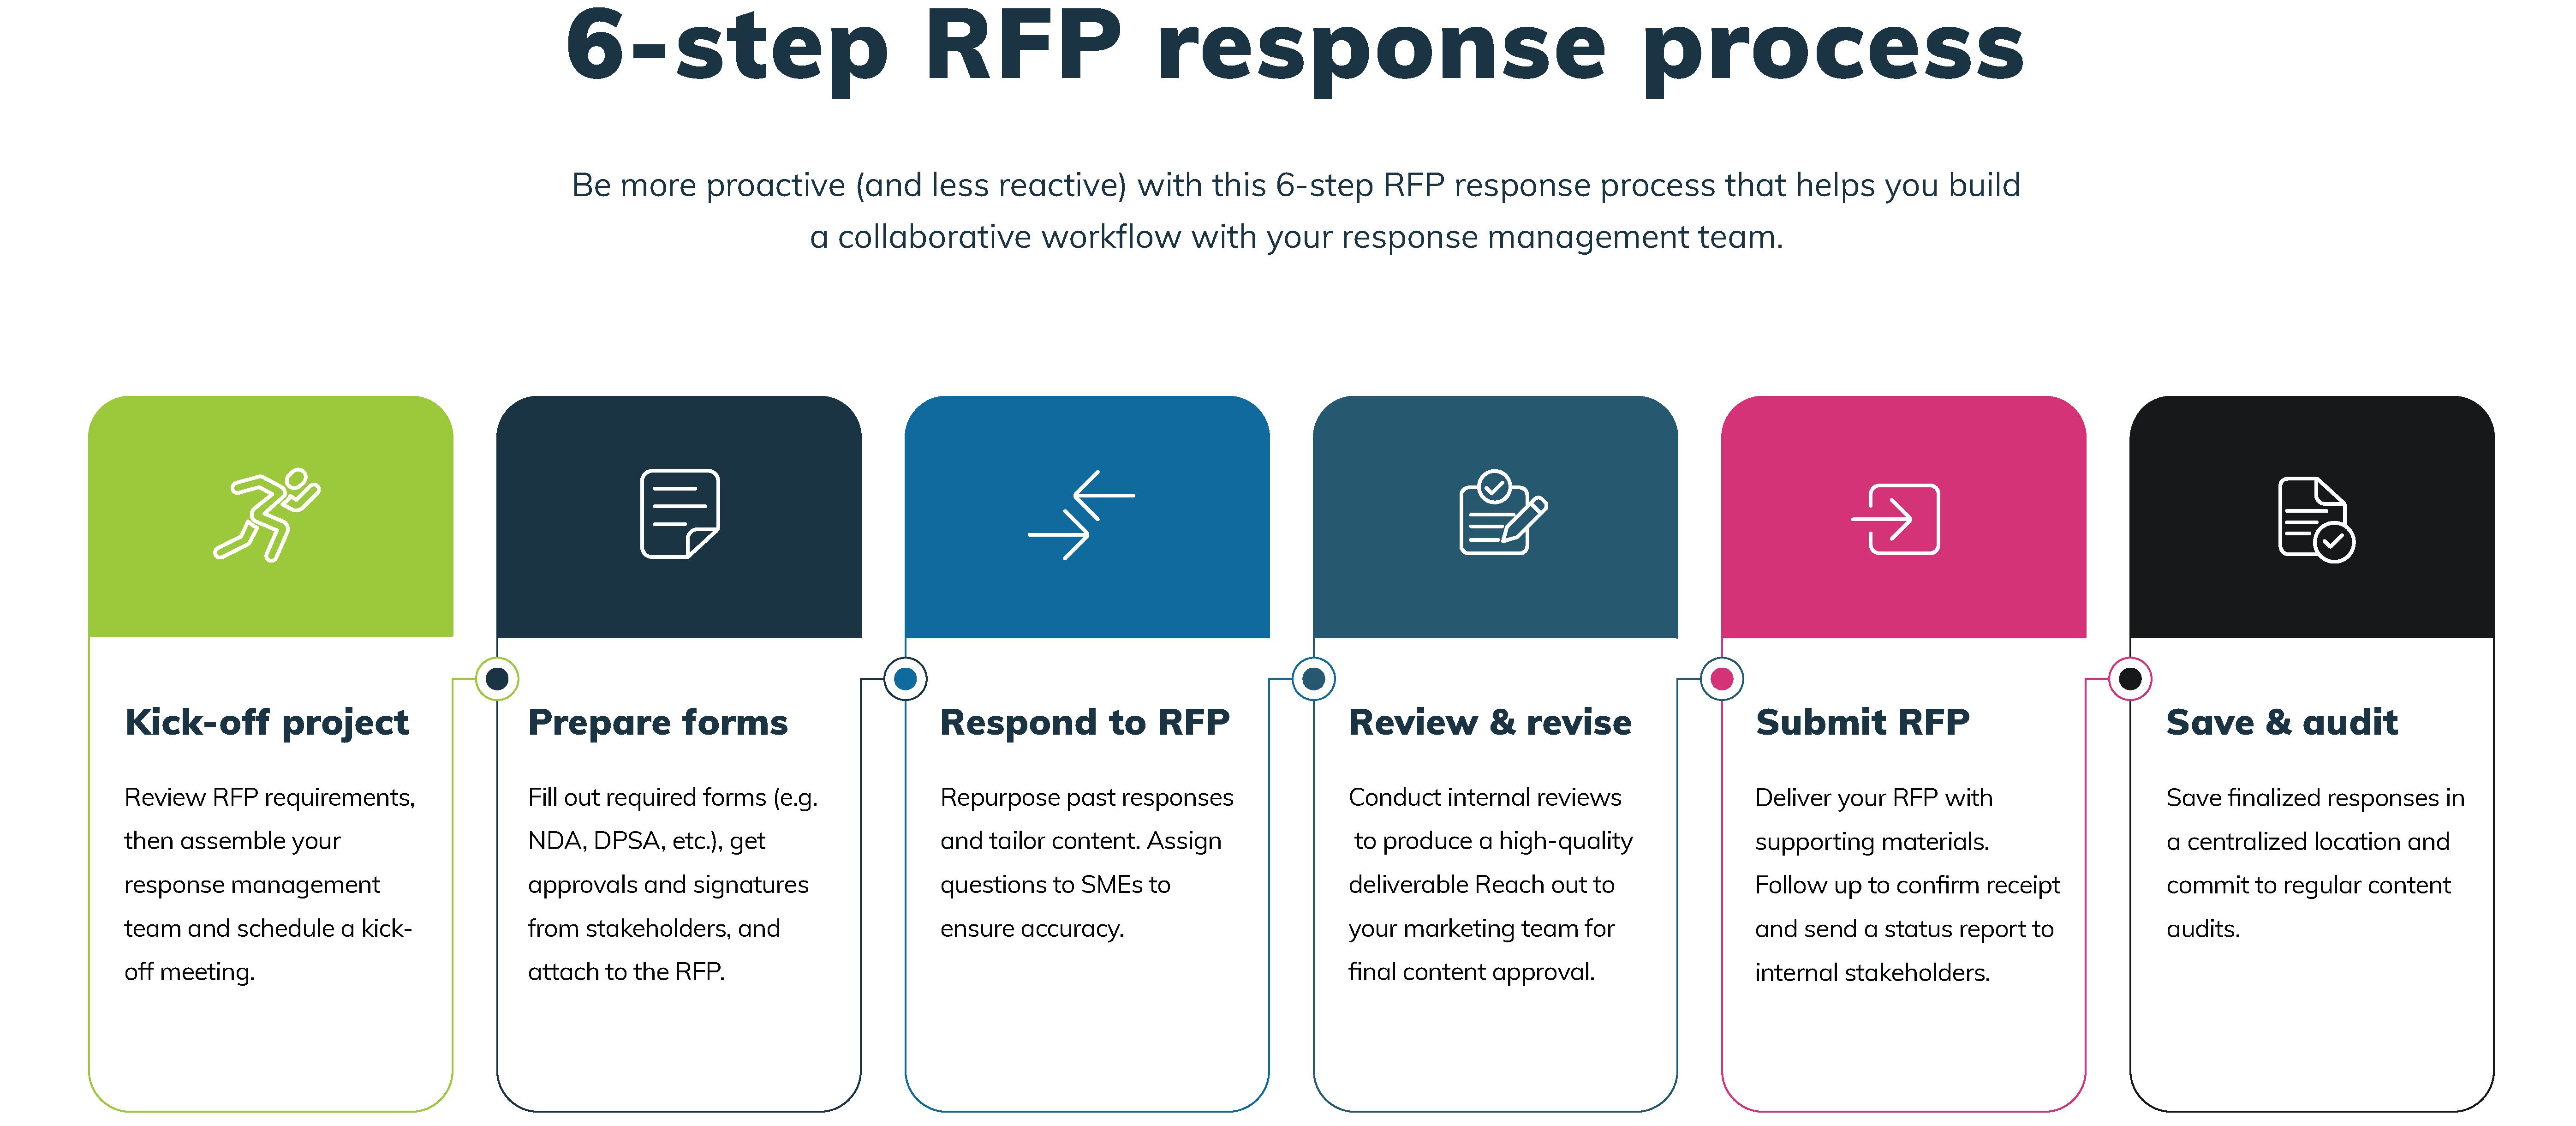 RFP Response Process Steps 